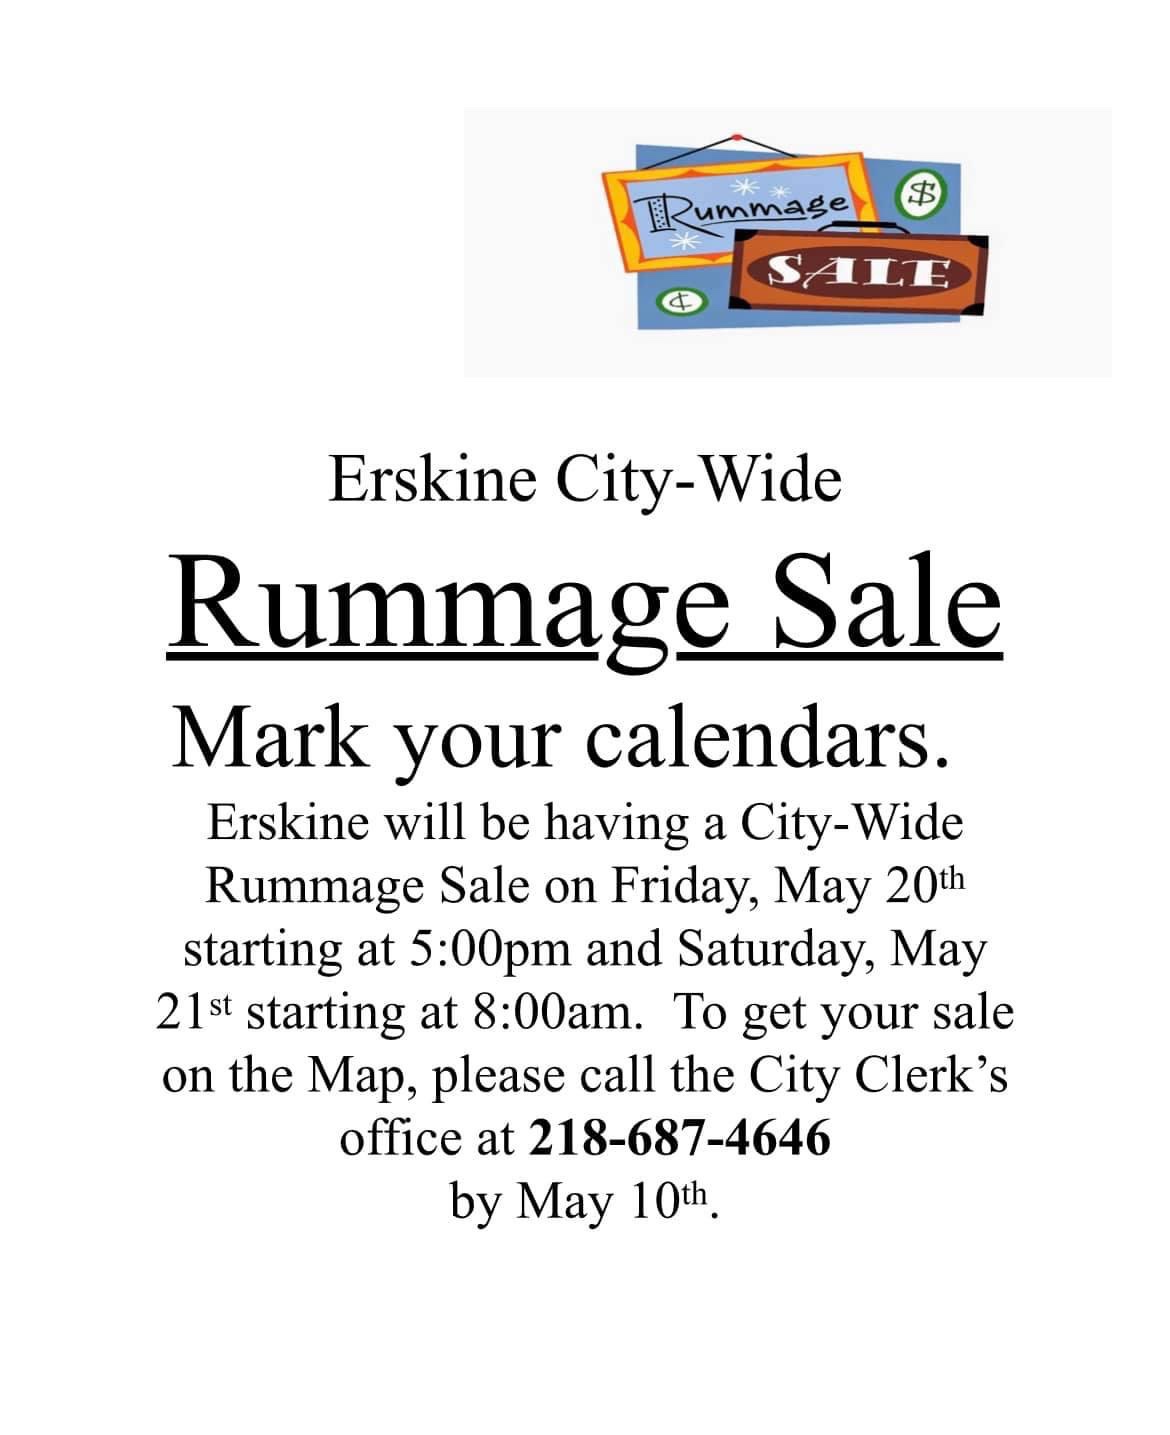 CityWide Rummage Sale City of Erskine